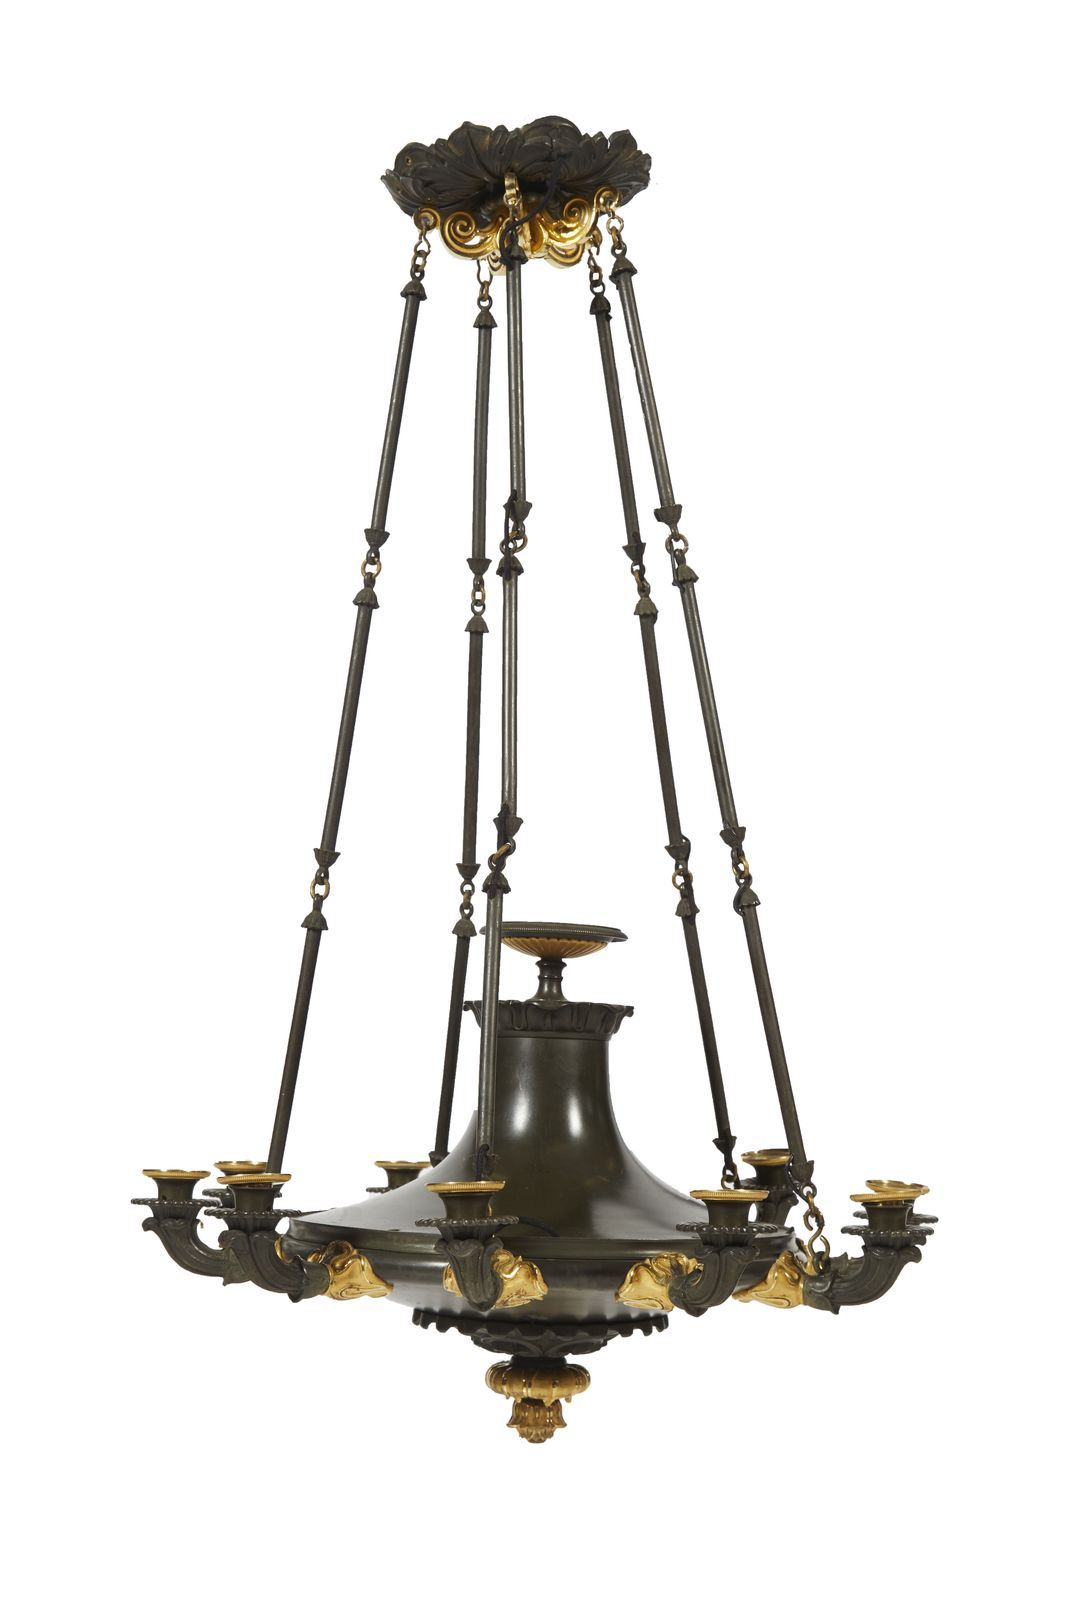 Null 123-青铜吊灯，具有双重棕色和鎏金的光泽，有十个灯臂，装饰有笛子和树叶。

复原期

94x61厘米